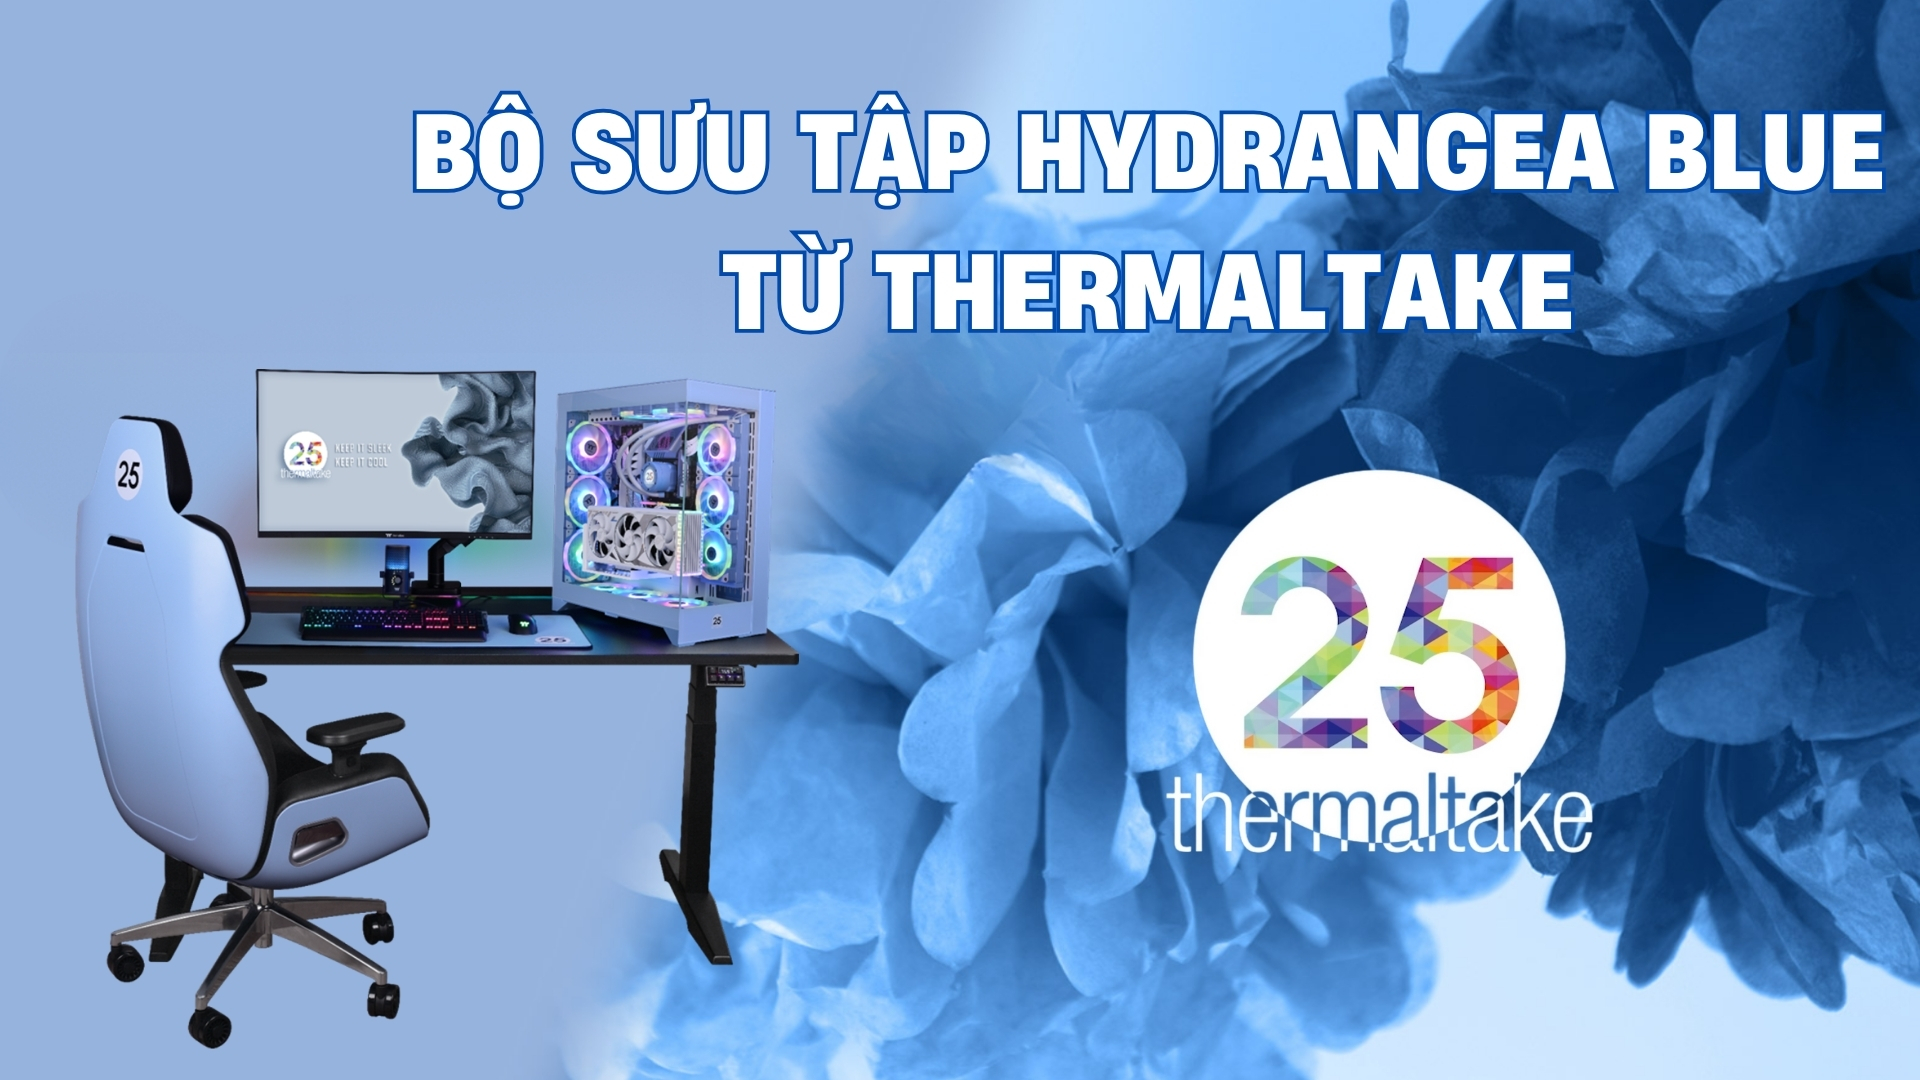 bo-suu-tap-hydrangea-blue-ky-niem-25-nam-thanh-lap-cua-thermaltake-thumb